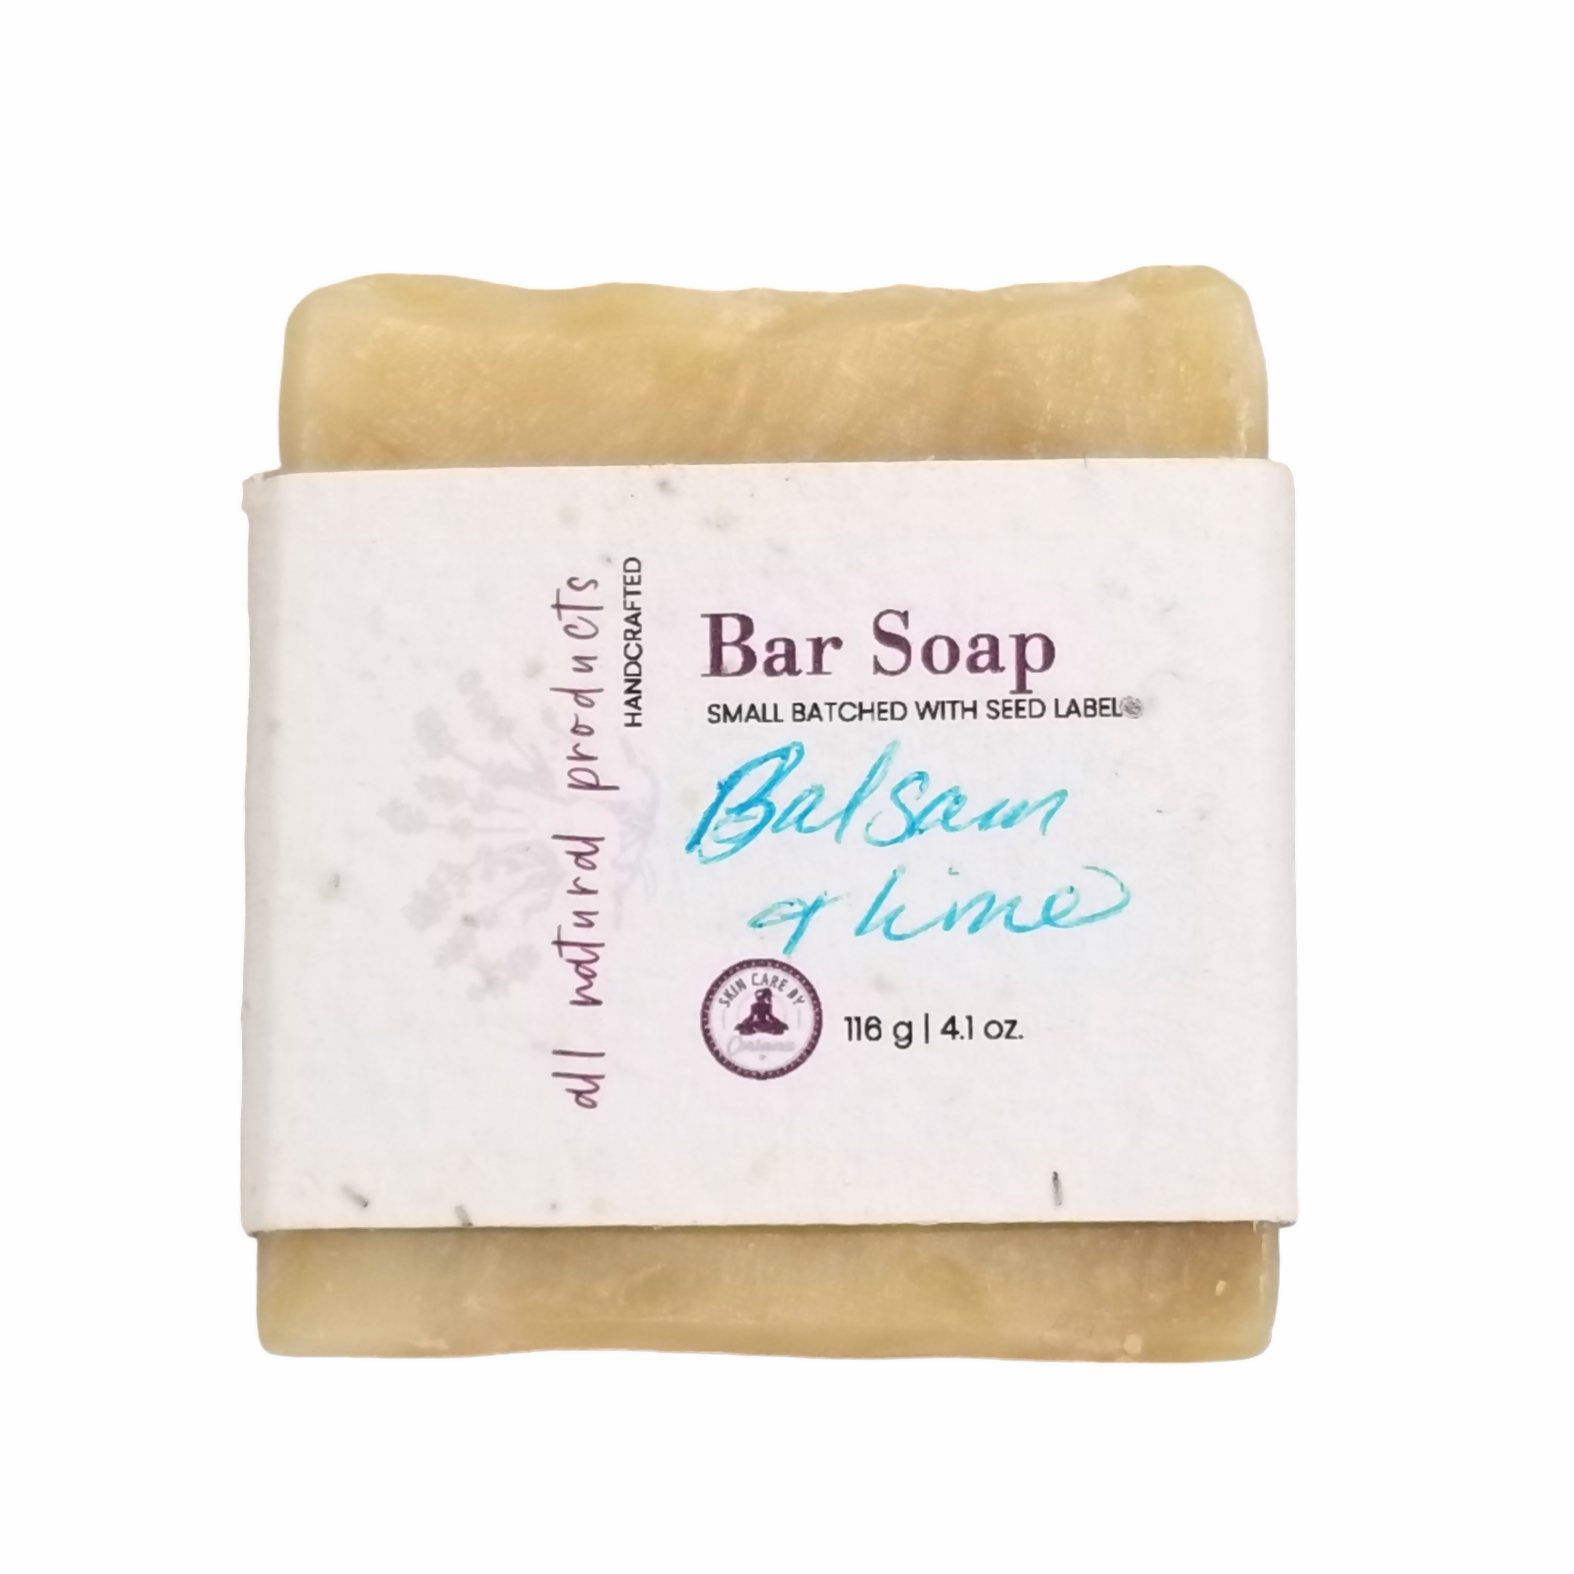 Balsam & Lime Bar Soap